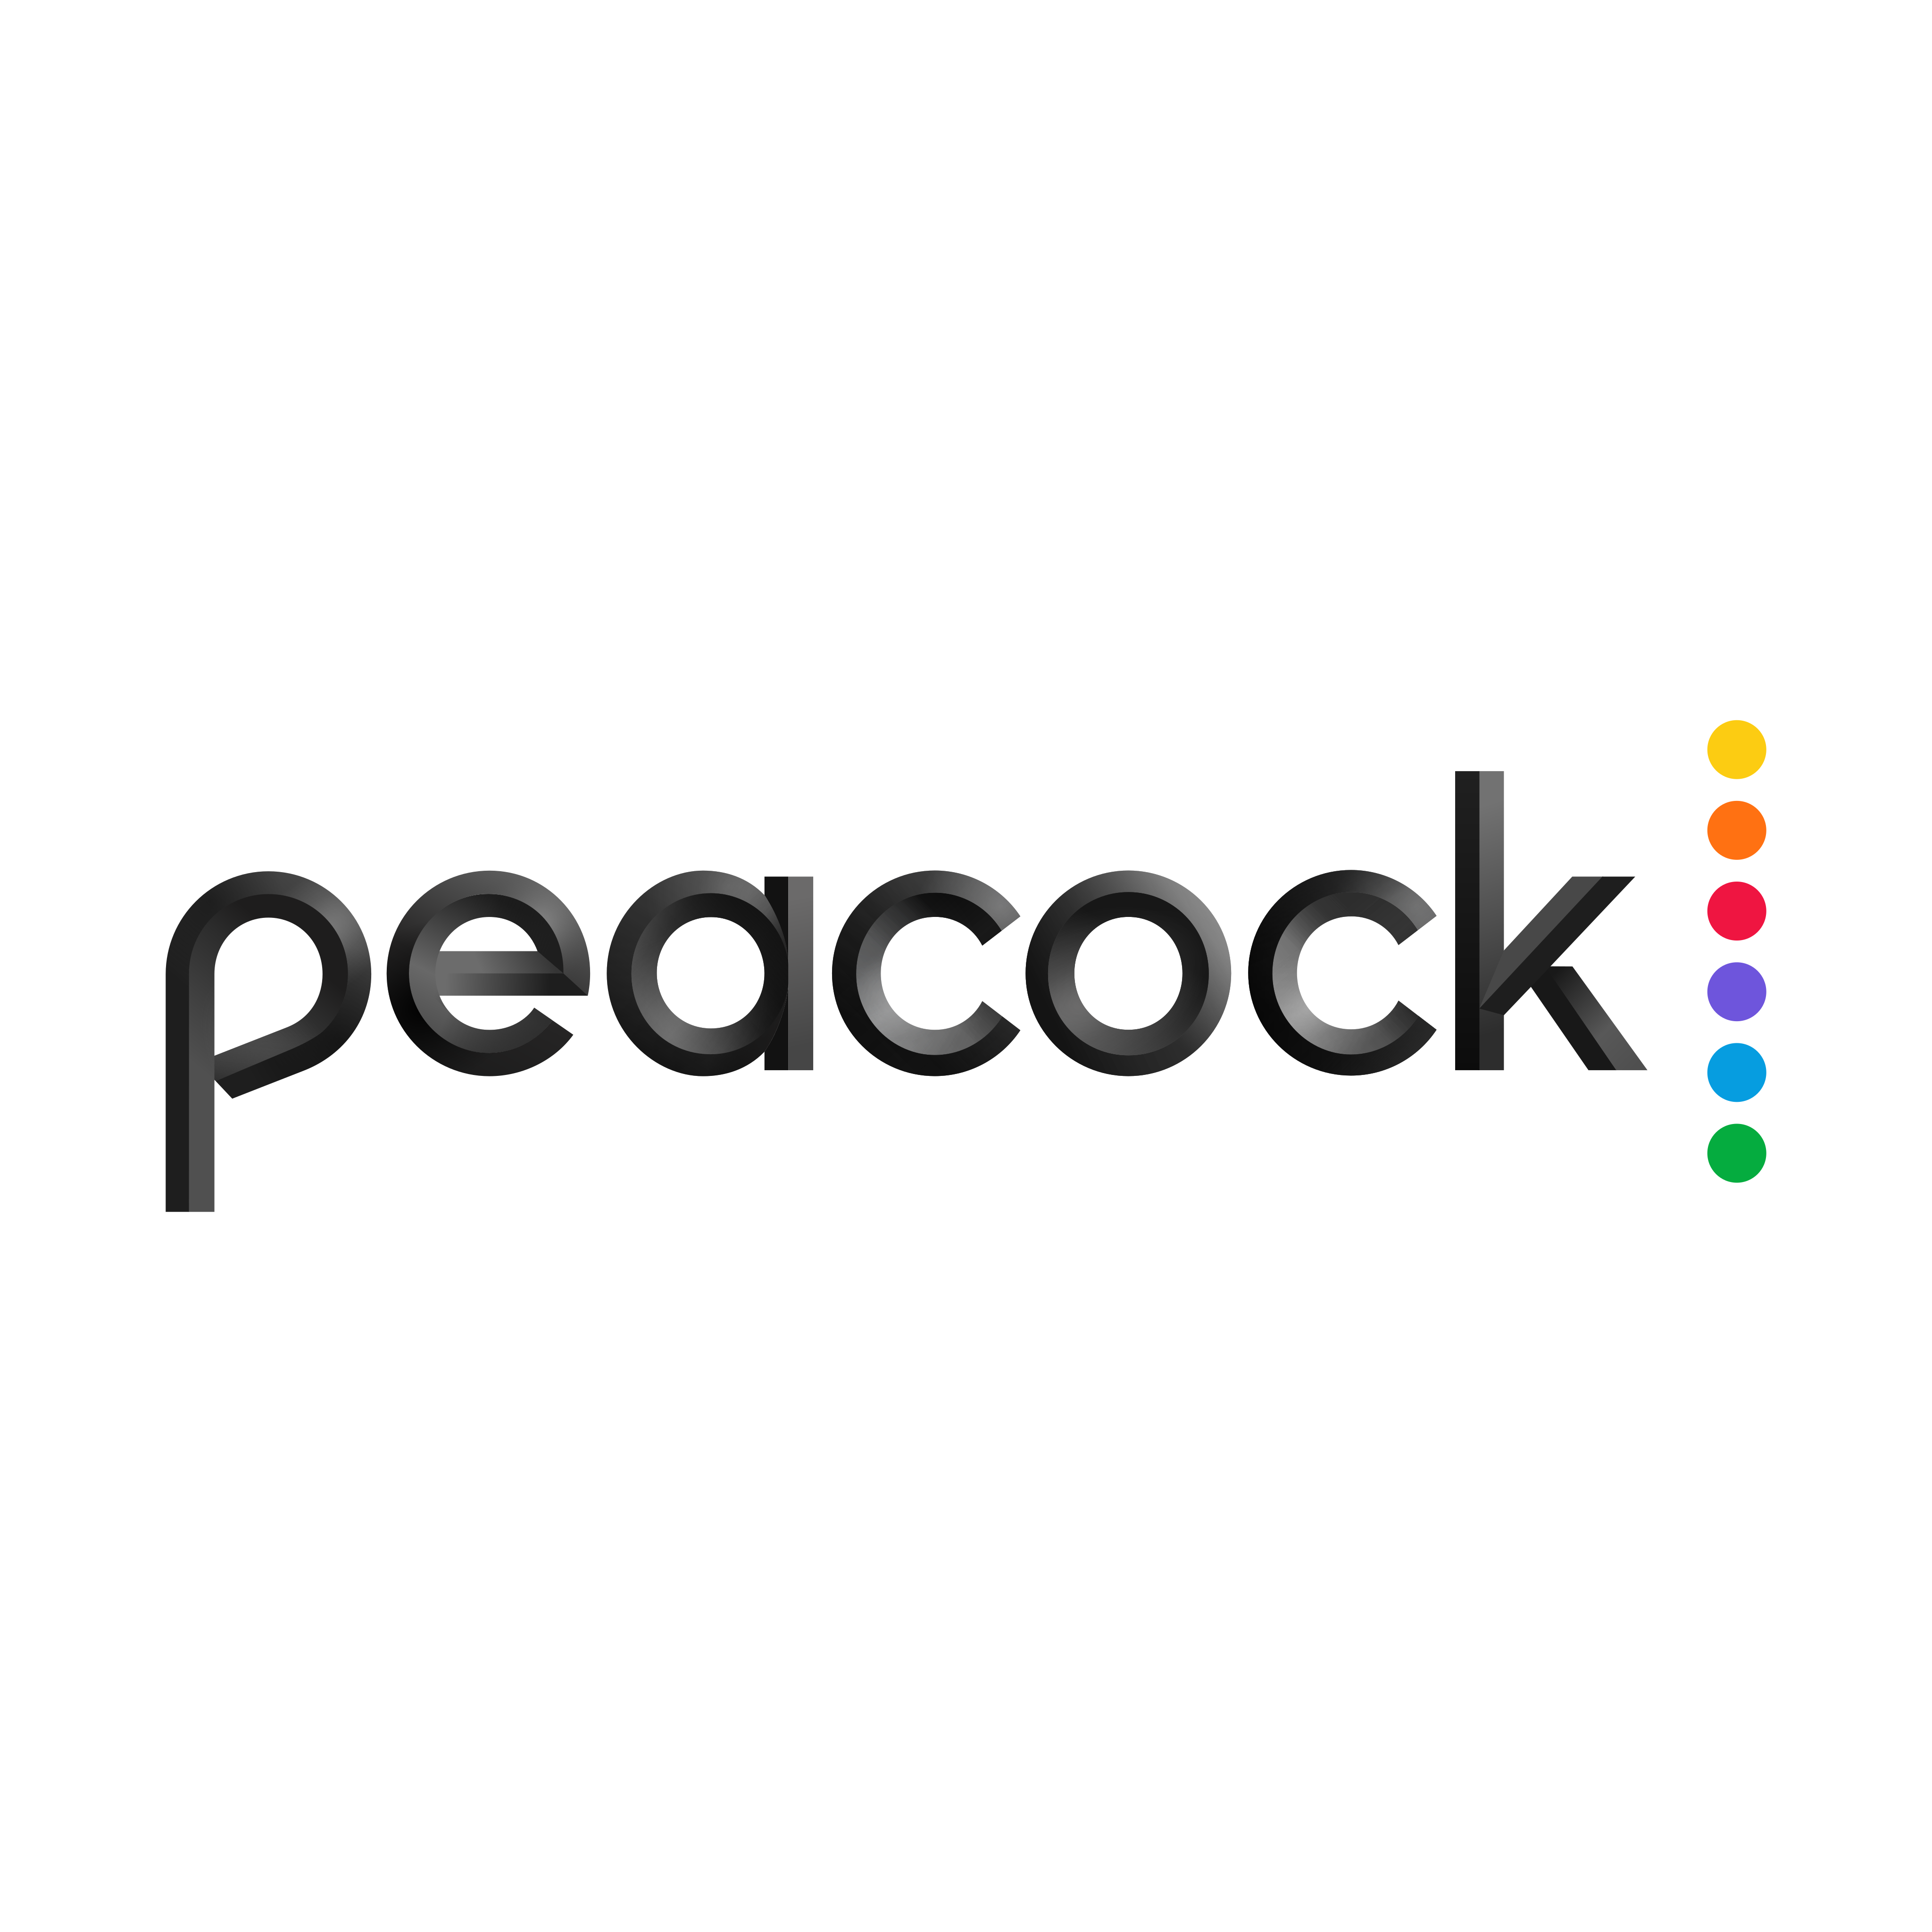 Peacock Logo PNG.